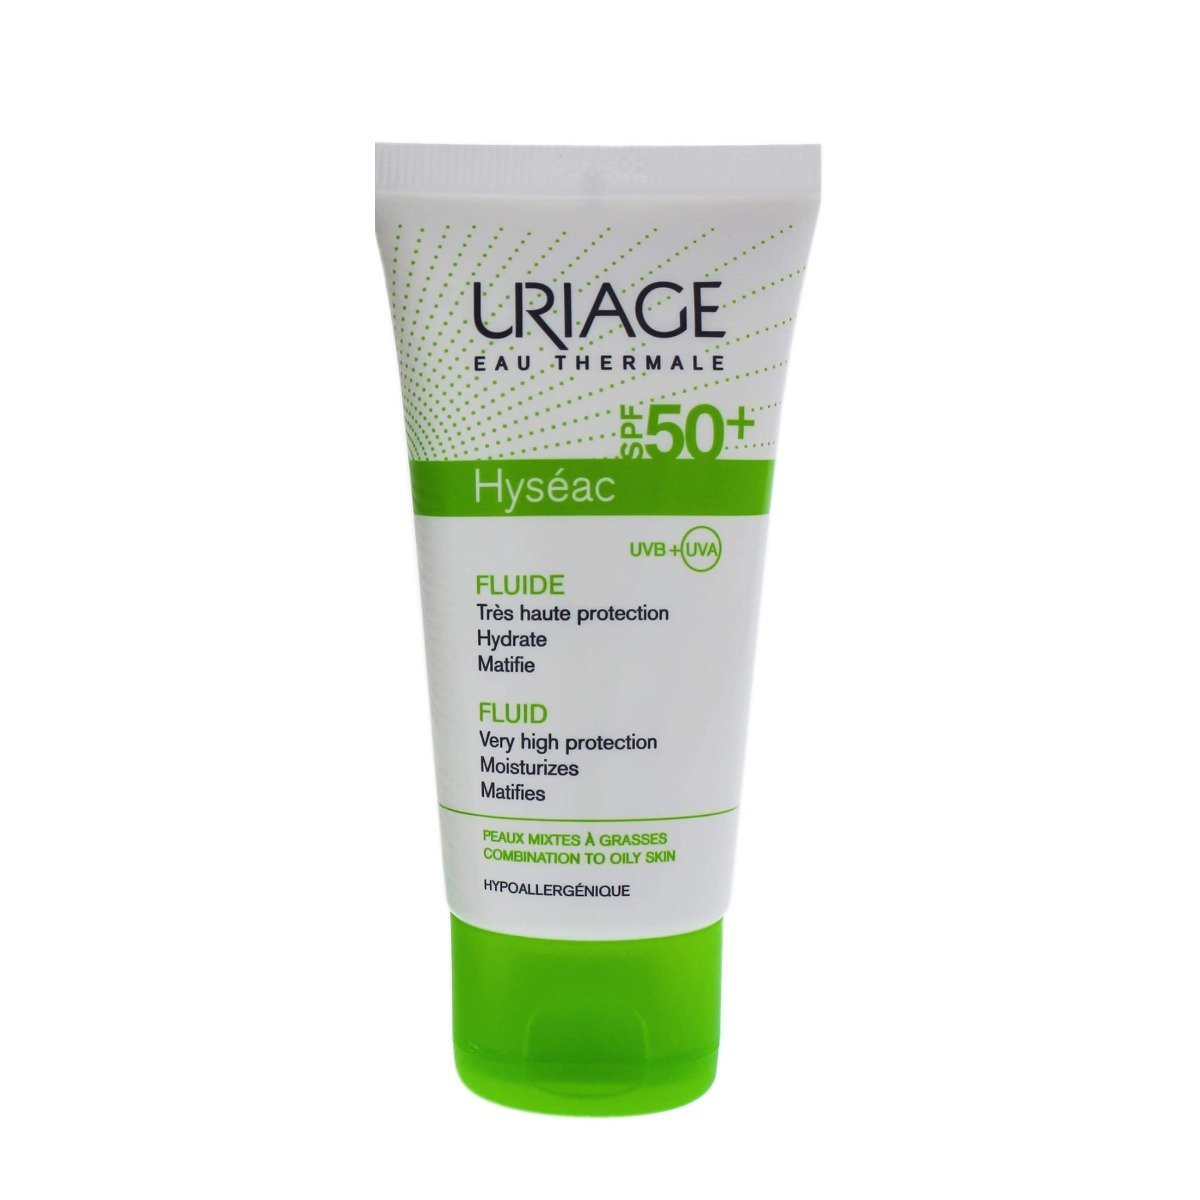 Uriage Hyseac Fluid SPF 50+ Combination To Oily Skin - 50ml - Bloom Pharmacy